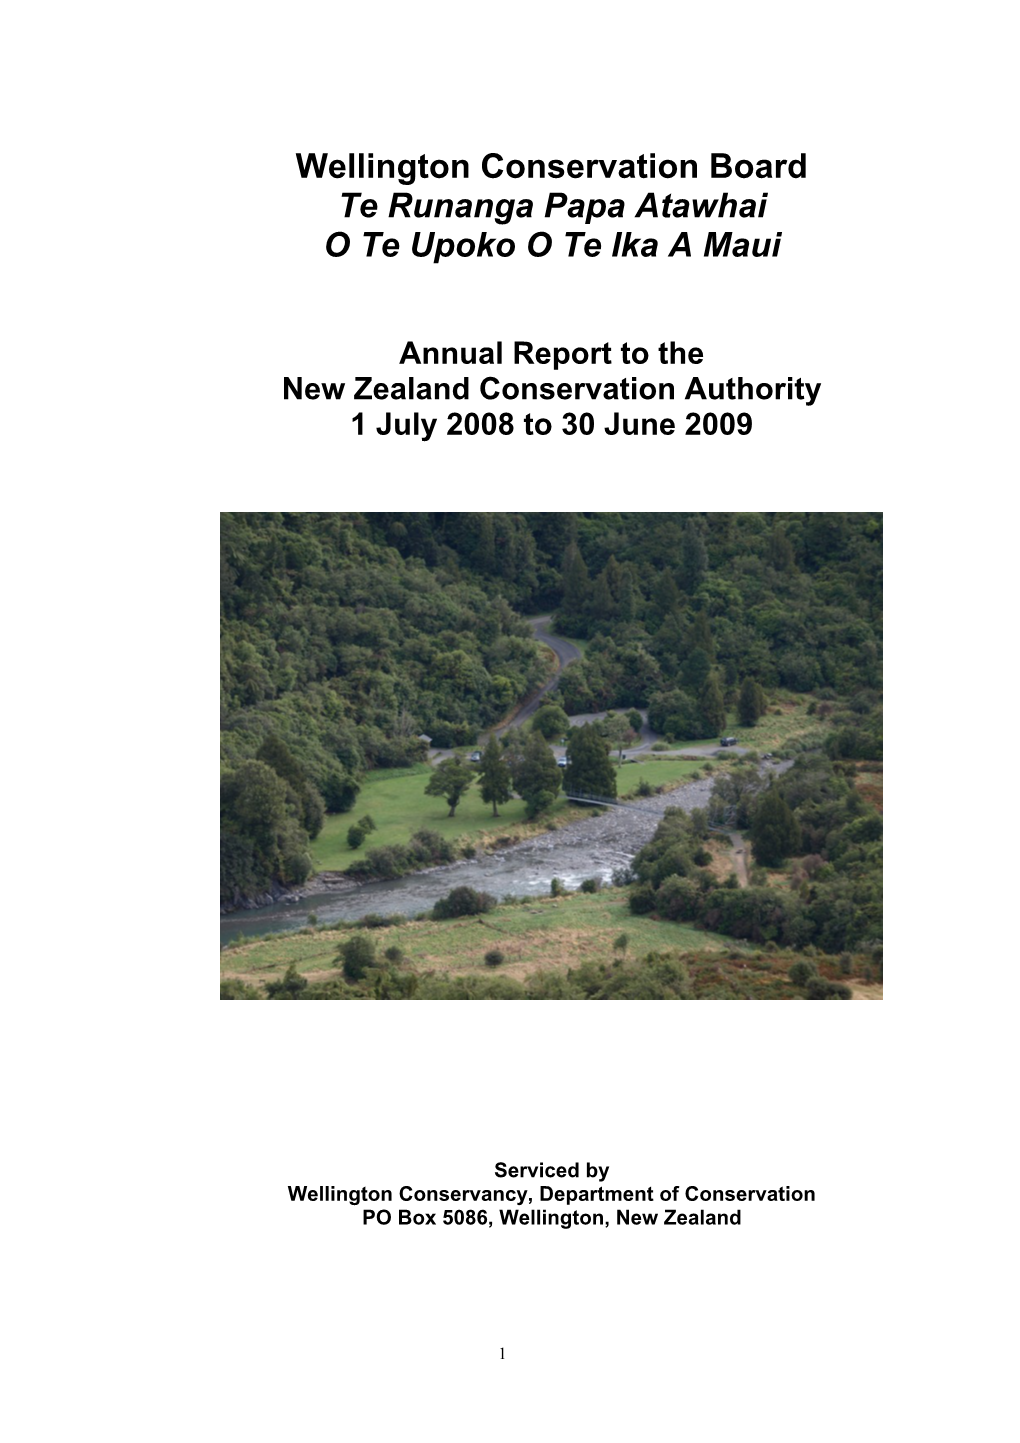 Wellington Conservation Board Annual Report 2008-2009